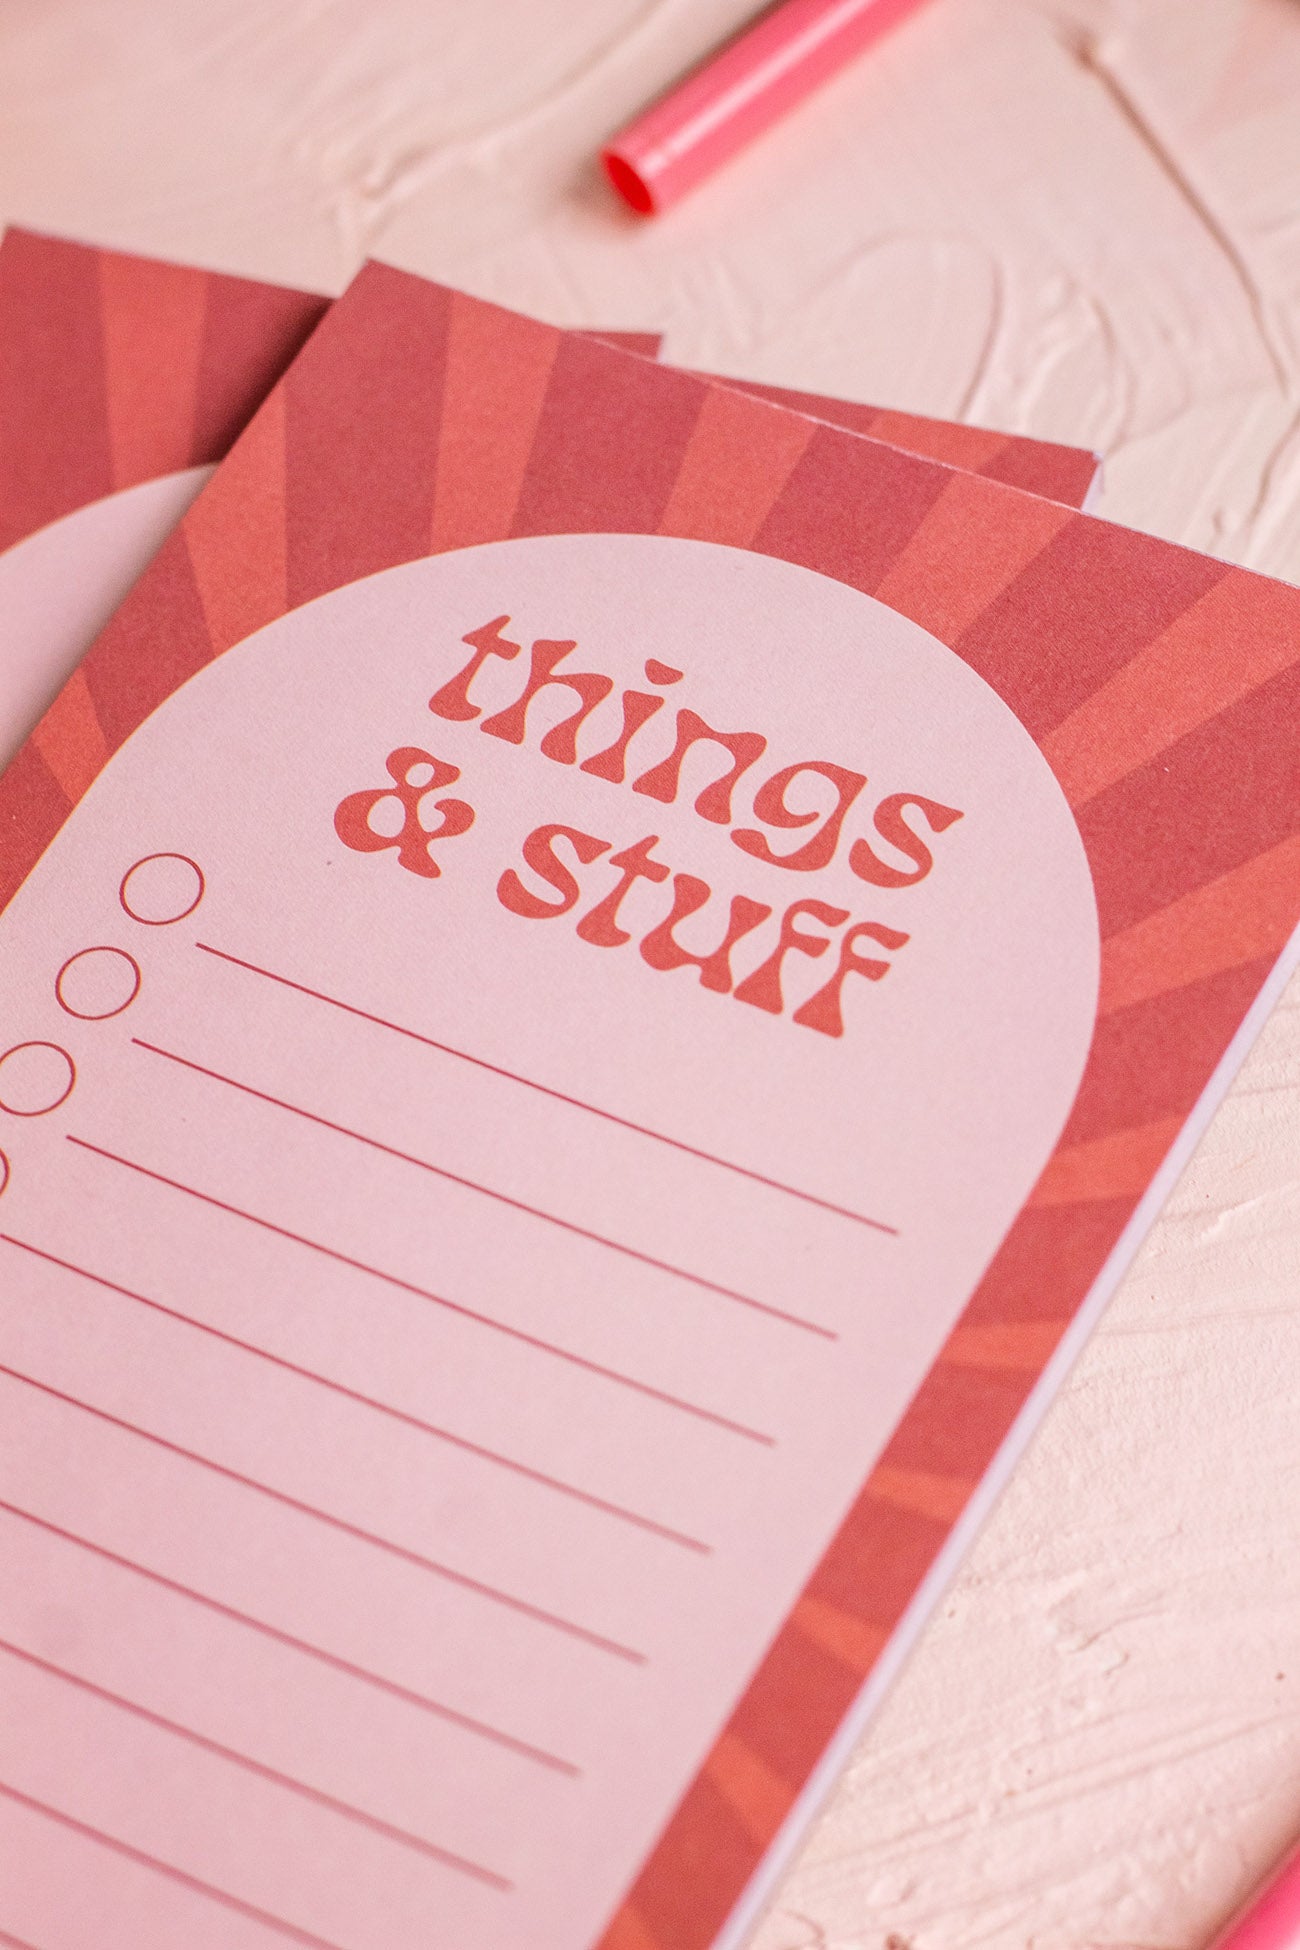 Things & Stuff Notepad